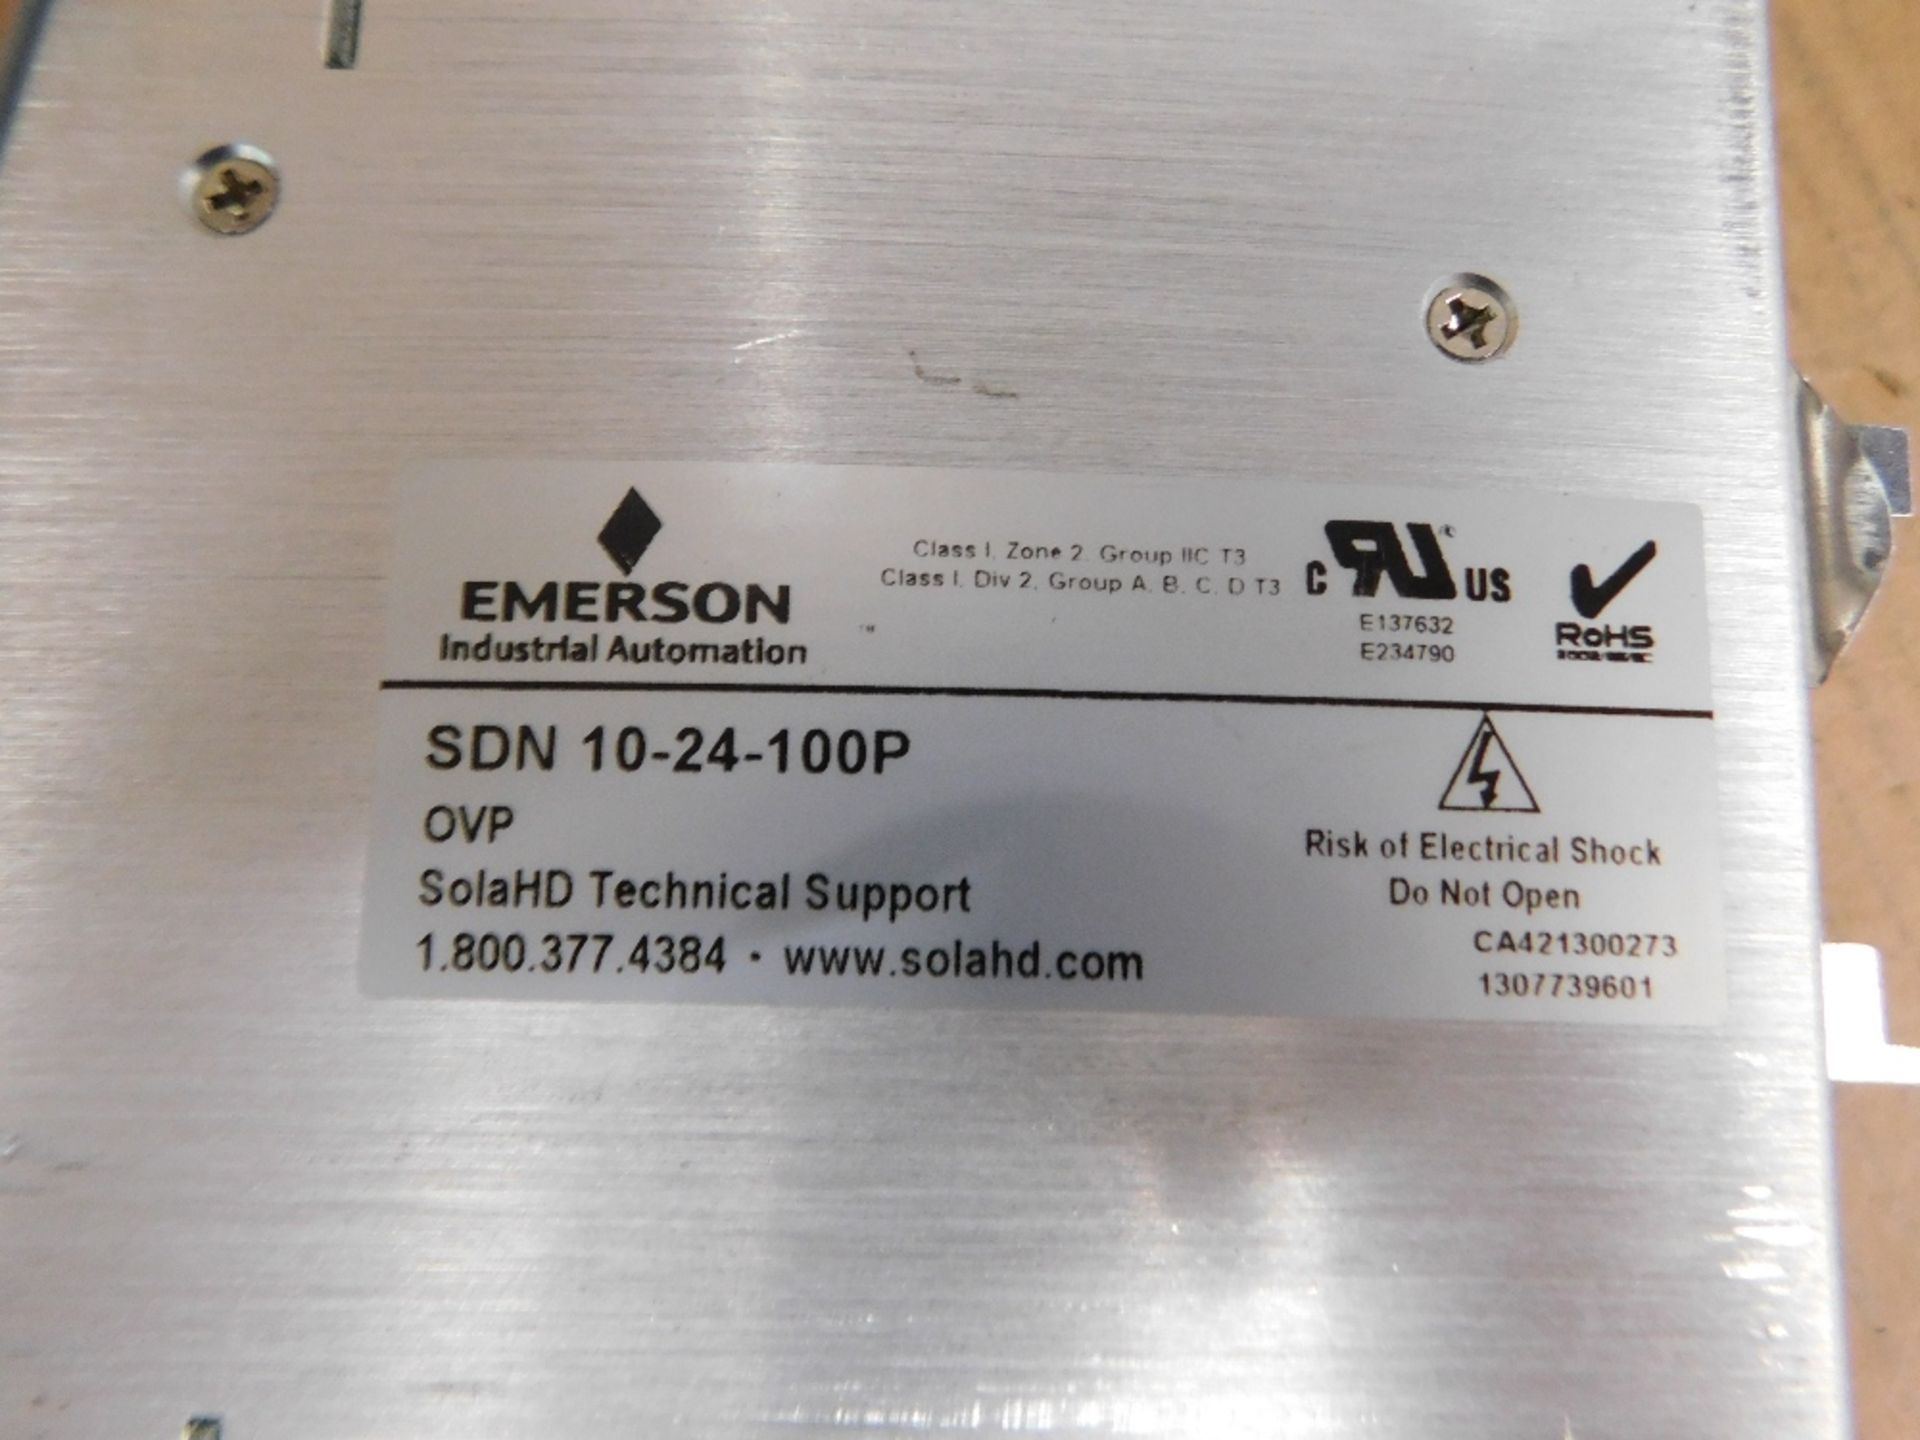 6x Acopian, Vicor, Emerson Power Supplies - Image 3 of 28